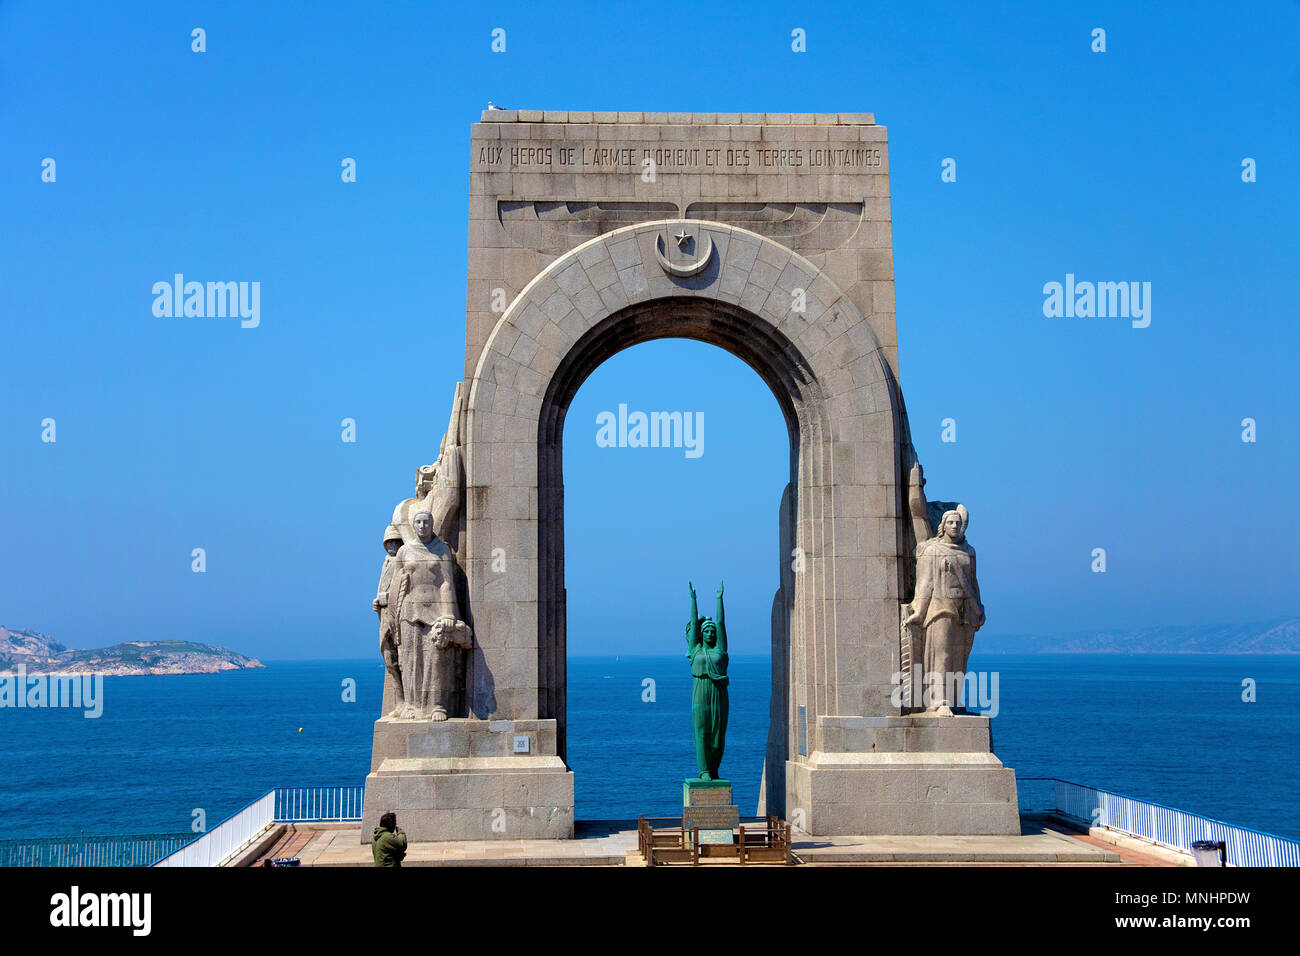 Monument aux morts d'Orient, memorial in tribute for fallen troops at Orient, Rue Vallon des Auffes, Marseille, Bouches-du-Rhone, South France, France Stock Photo